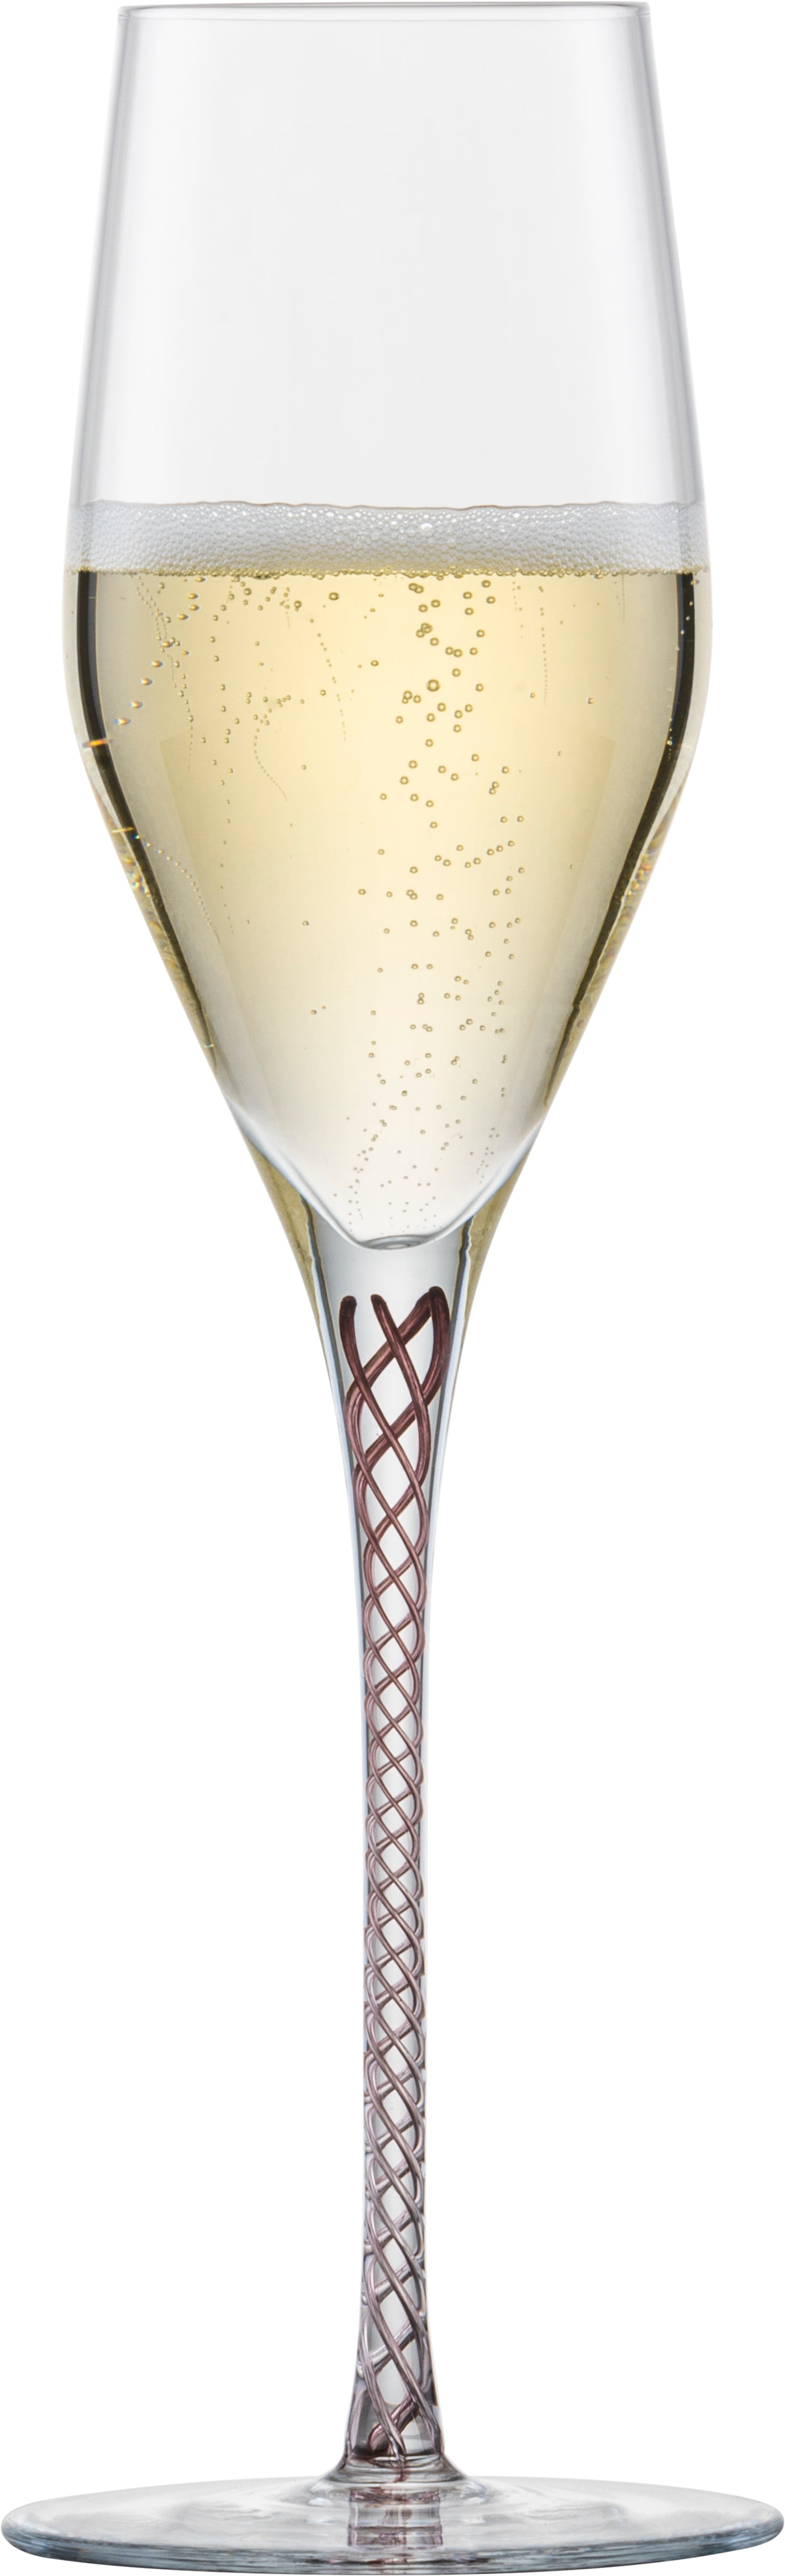 Spirit Champagne Glass, Aubergine, Set of 2